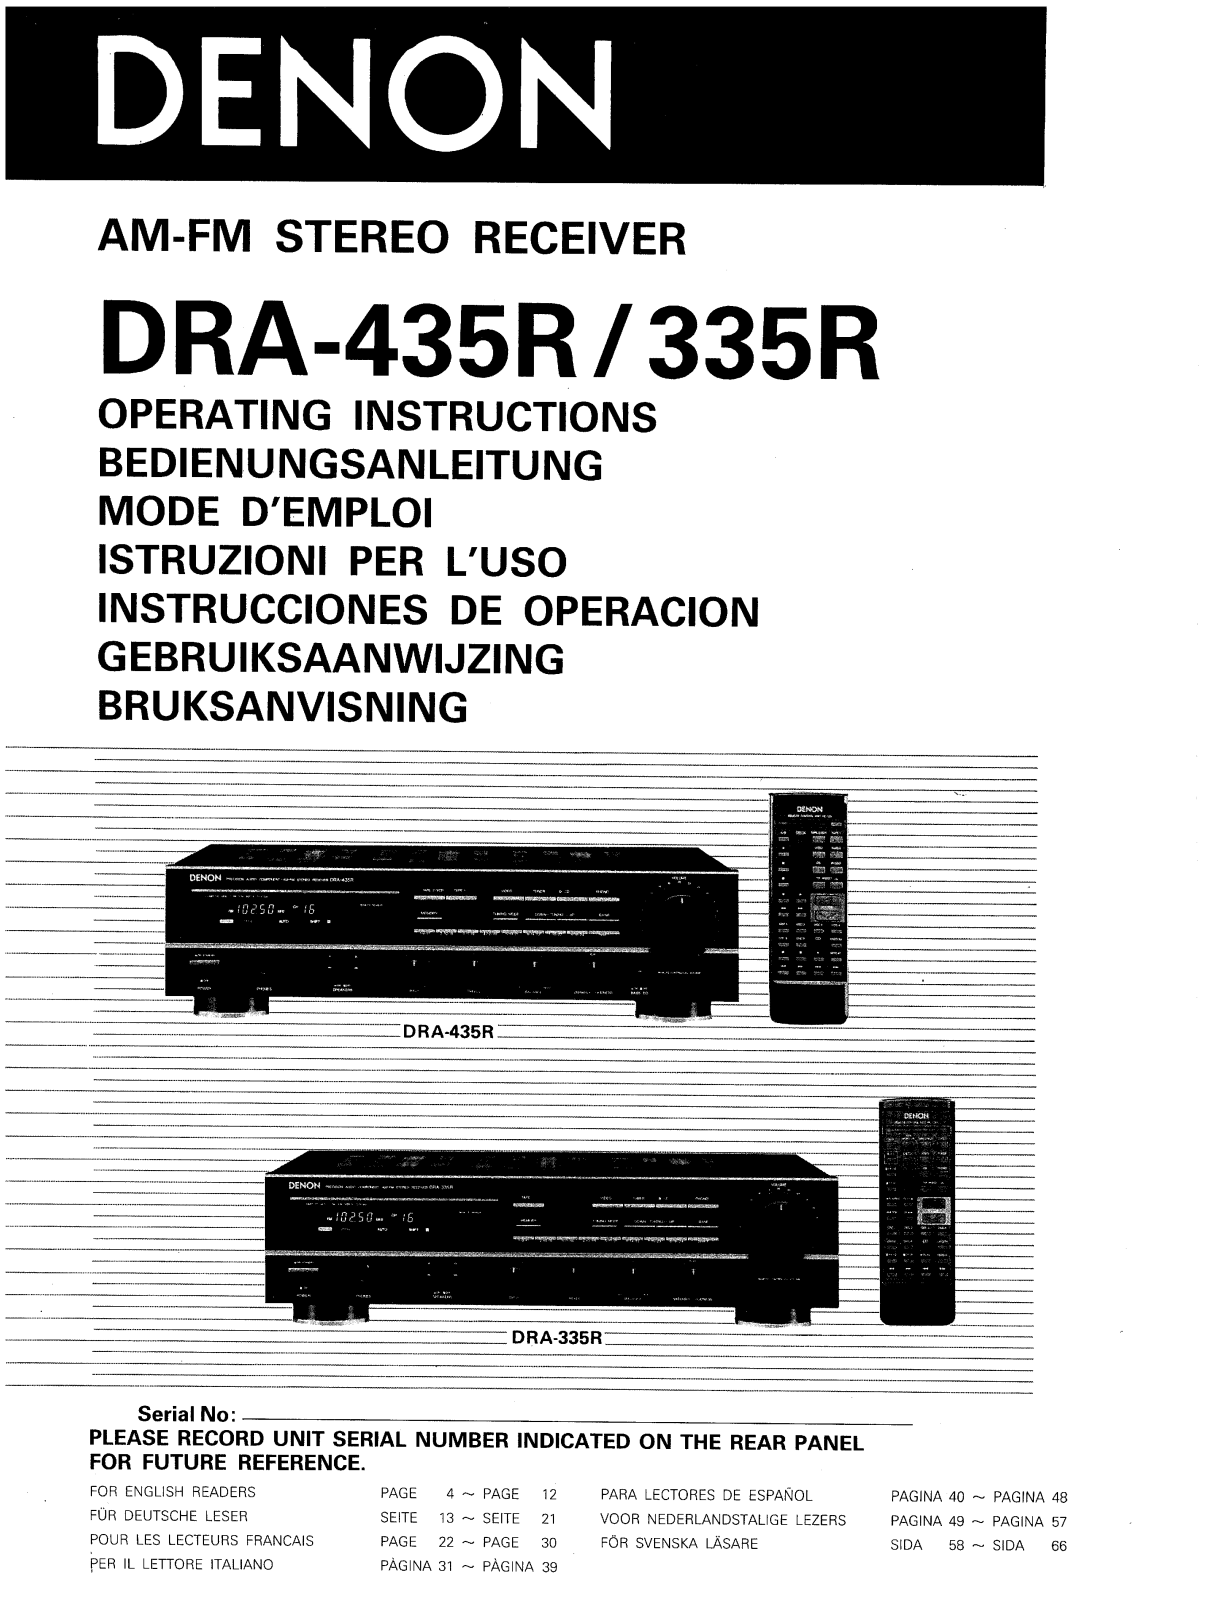 Denon DRA-435R Owner's Manual